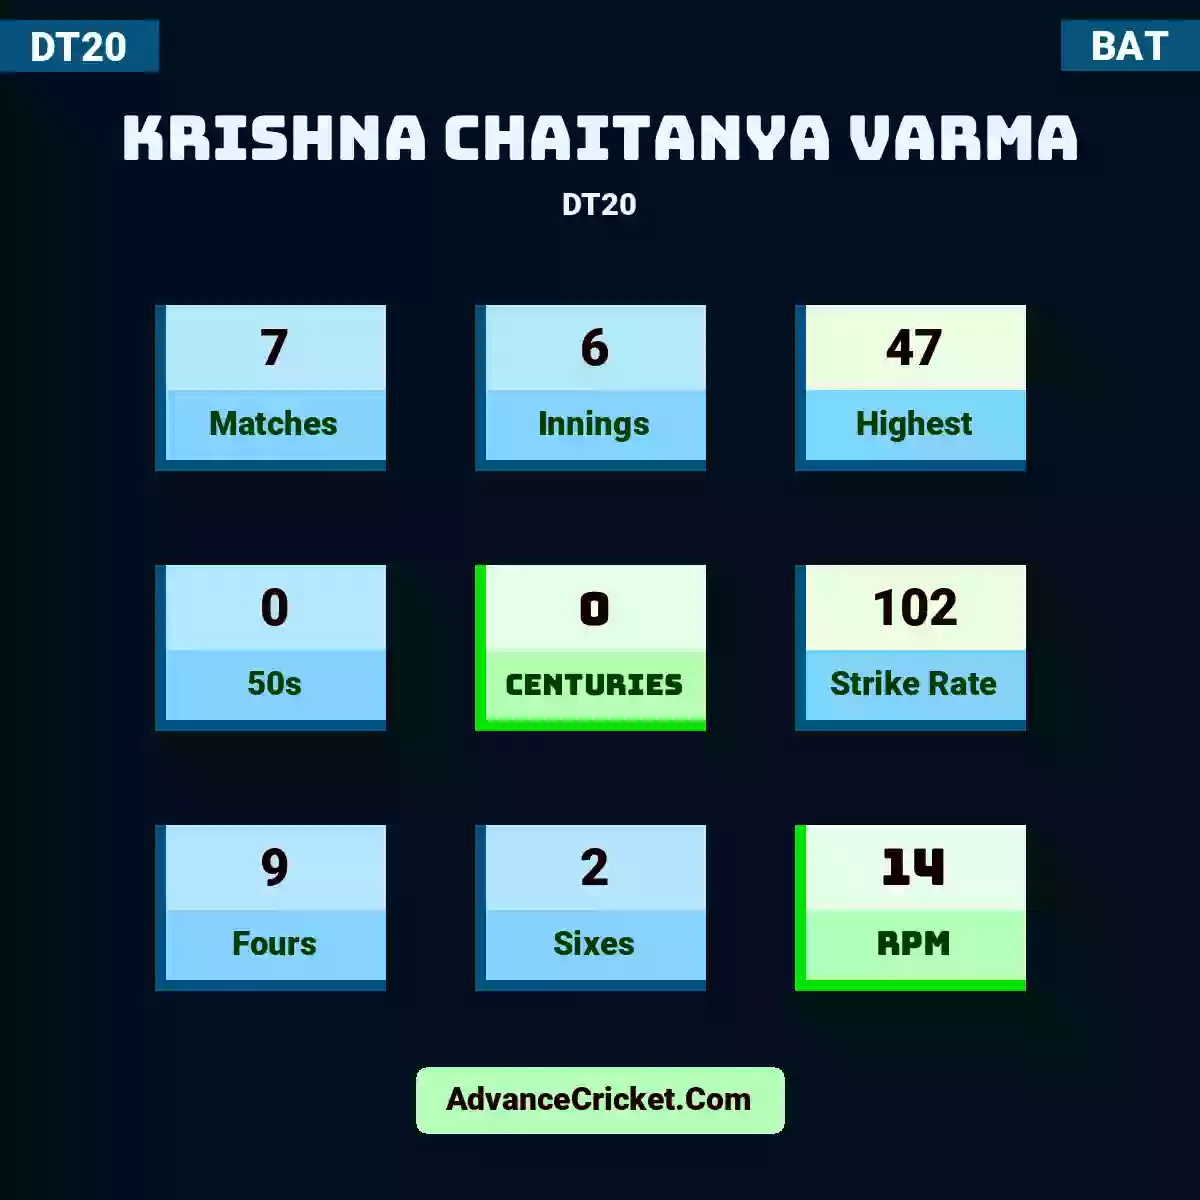 Krishna Chaitanya Varma DT20 , Krishna Chaitanya Varma played 7 matches, scored 47 runs as highest, 0 half-centuries, and 0 centuries, with a strike rate of 102. k.chaitanya.varma hit 9 fours and 2 sixes, with an RPM of 14.